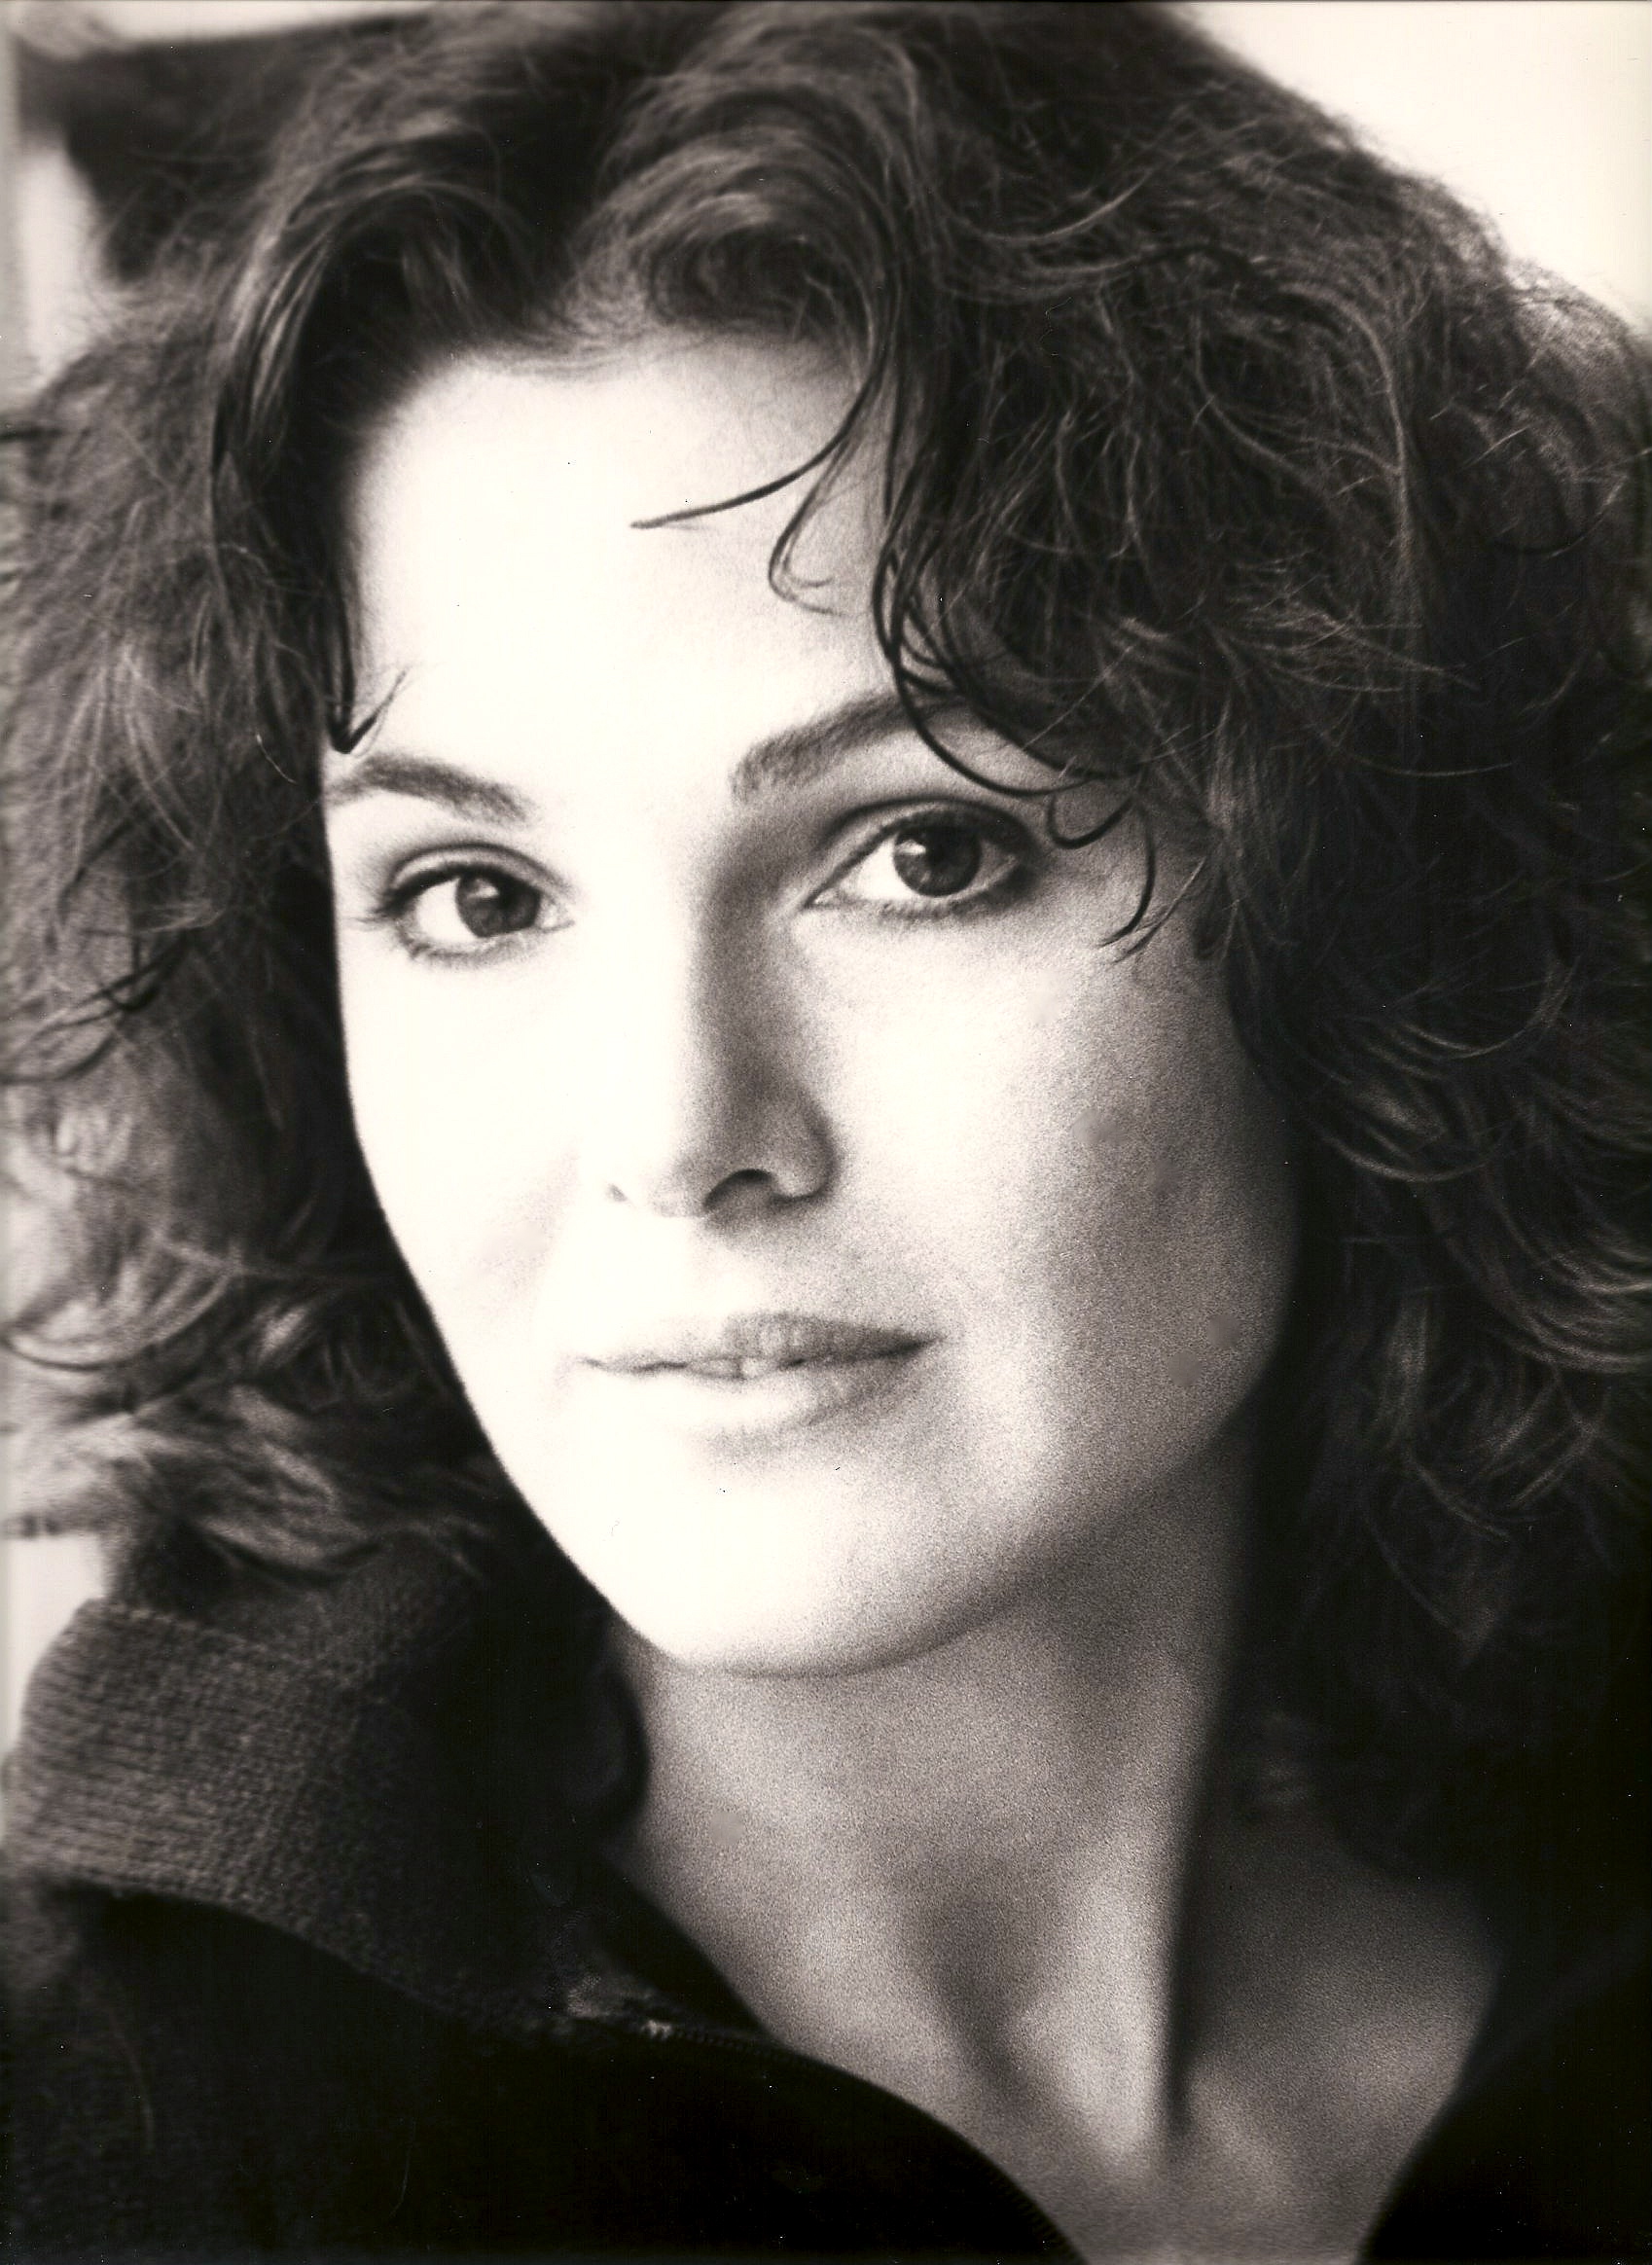 Carrie Klein